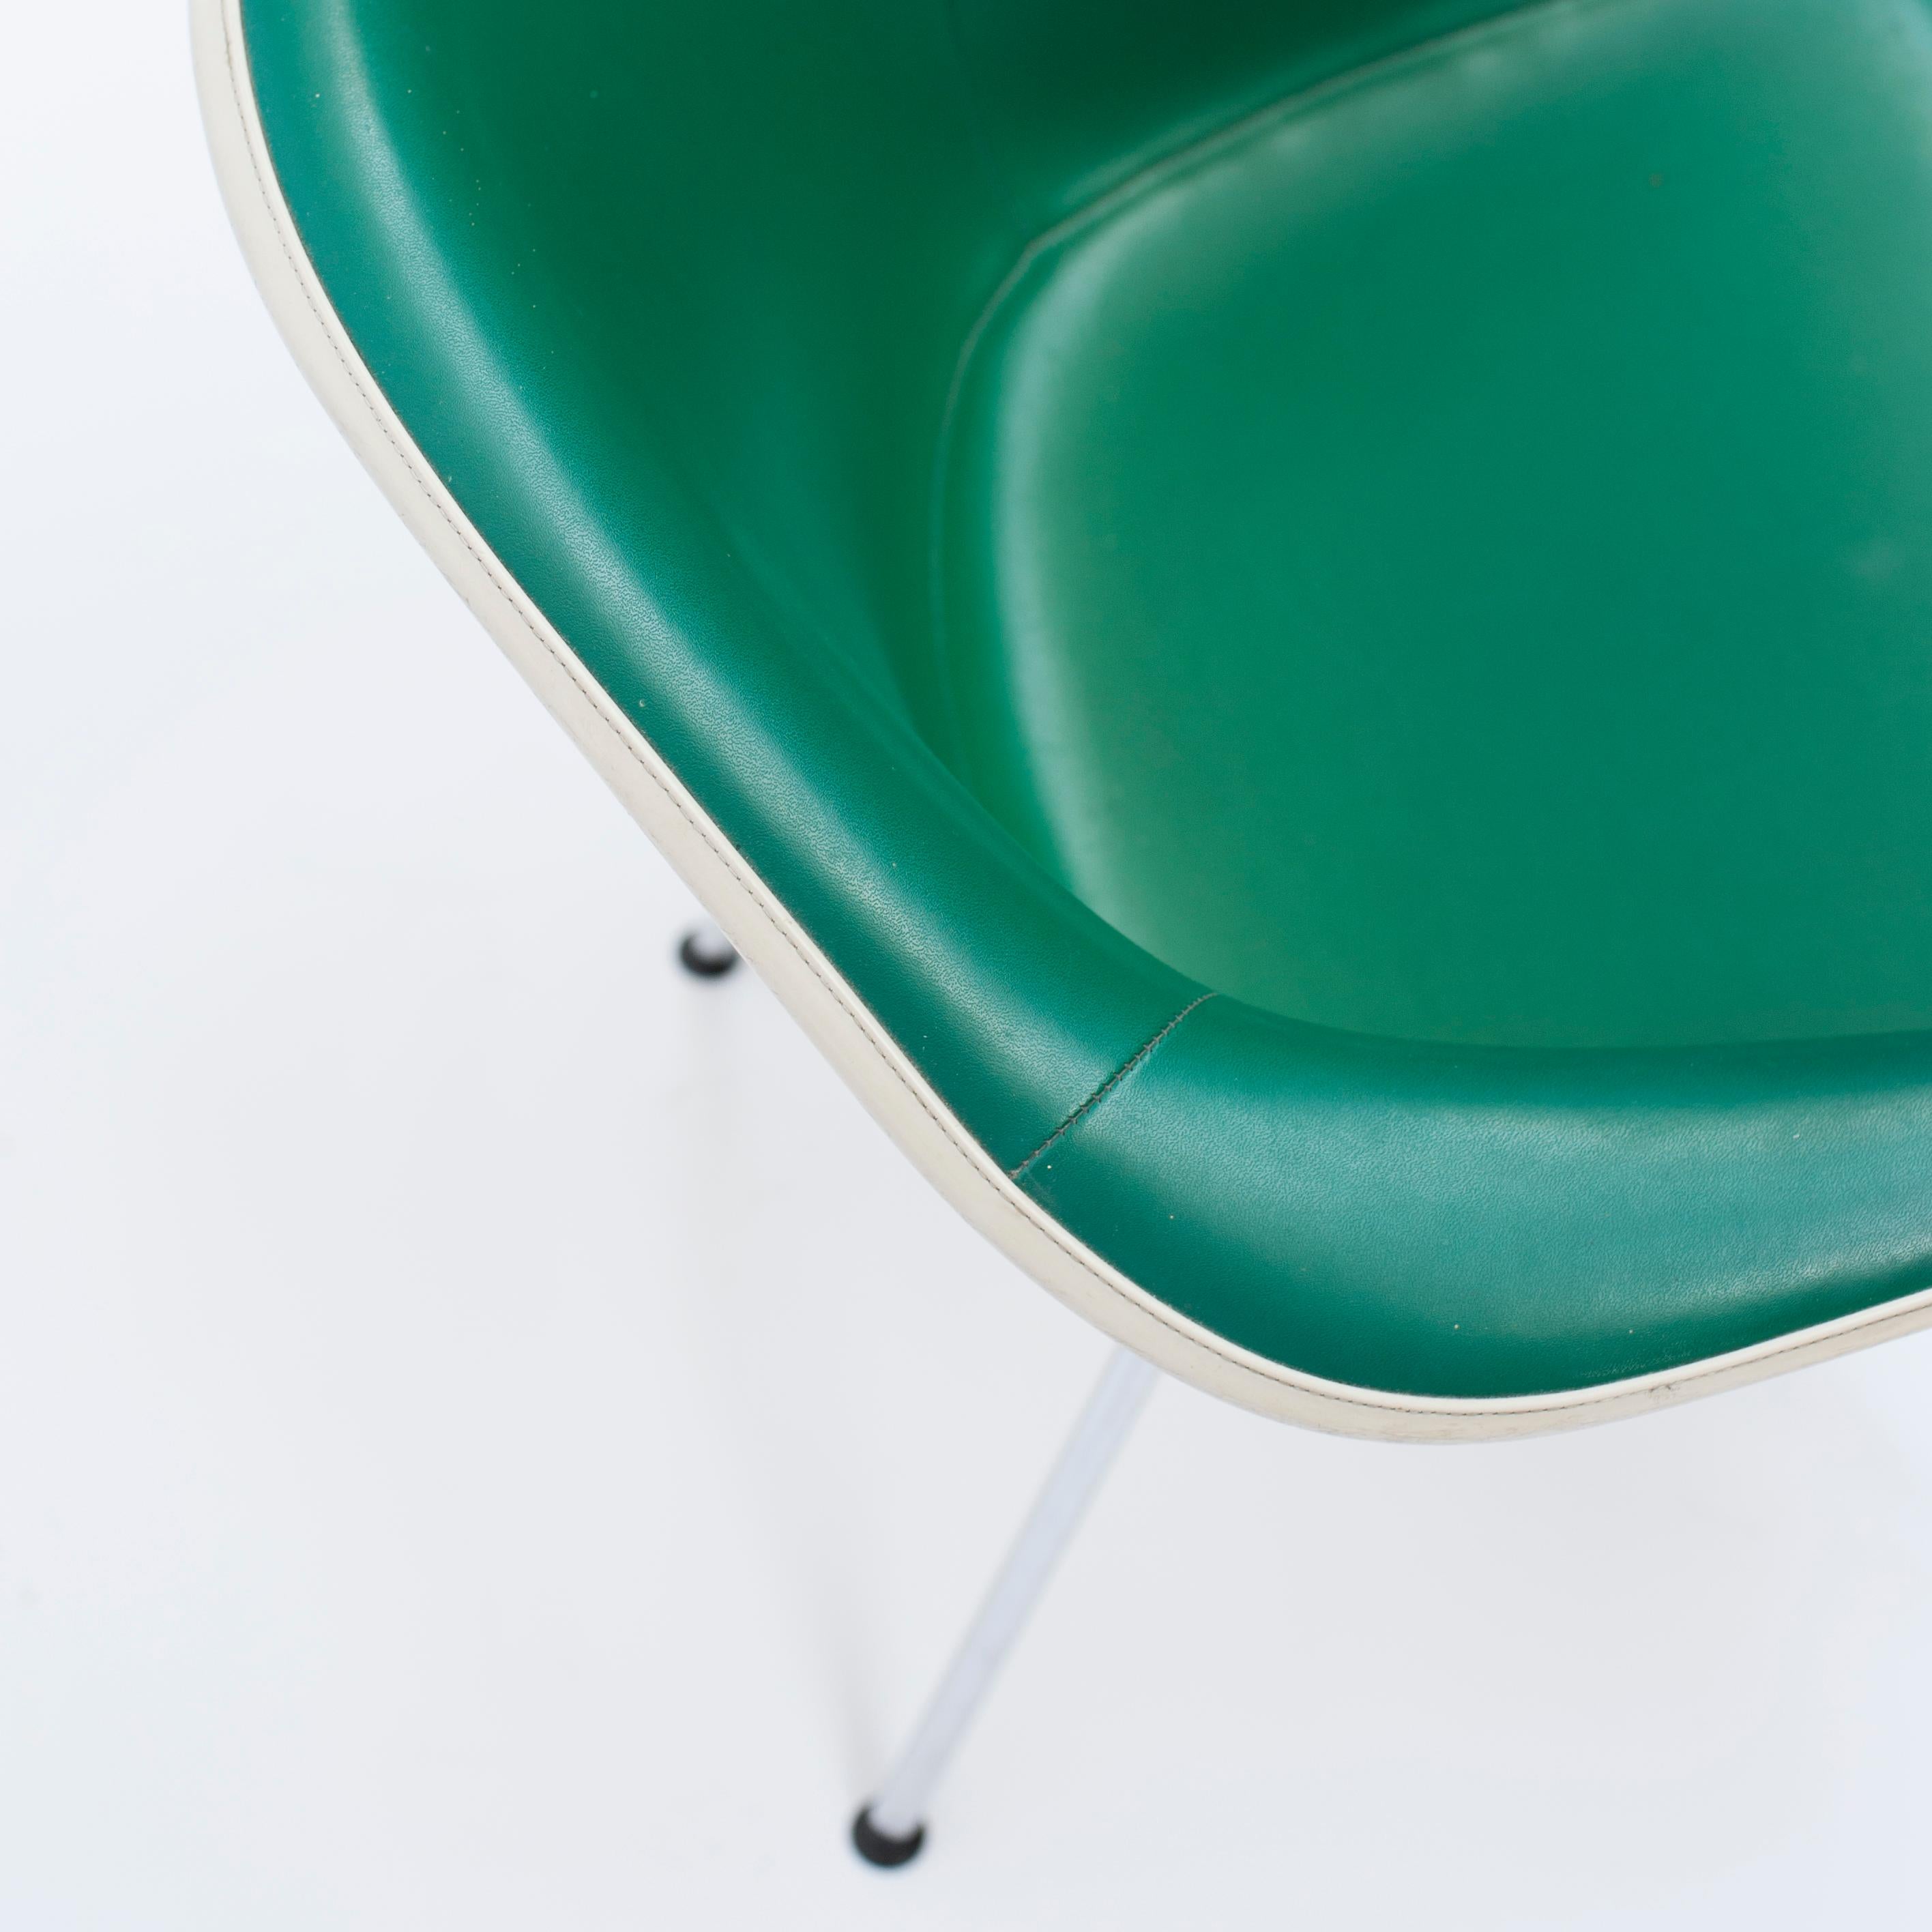 Sessel „Dax“ aus grünem Leder von Charles & Ray Eames, 1960er Jahre (20. Jahrhundert) im Angebot